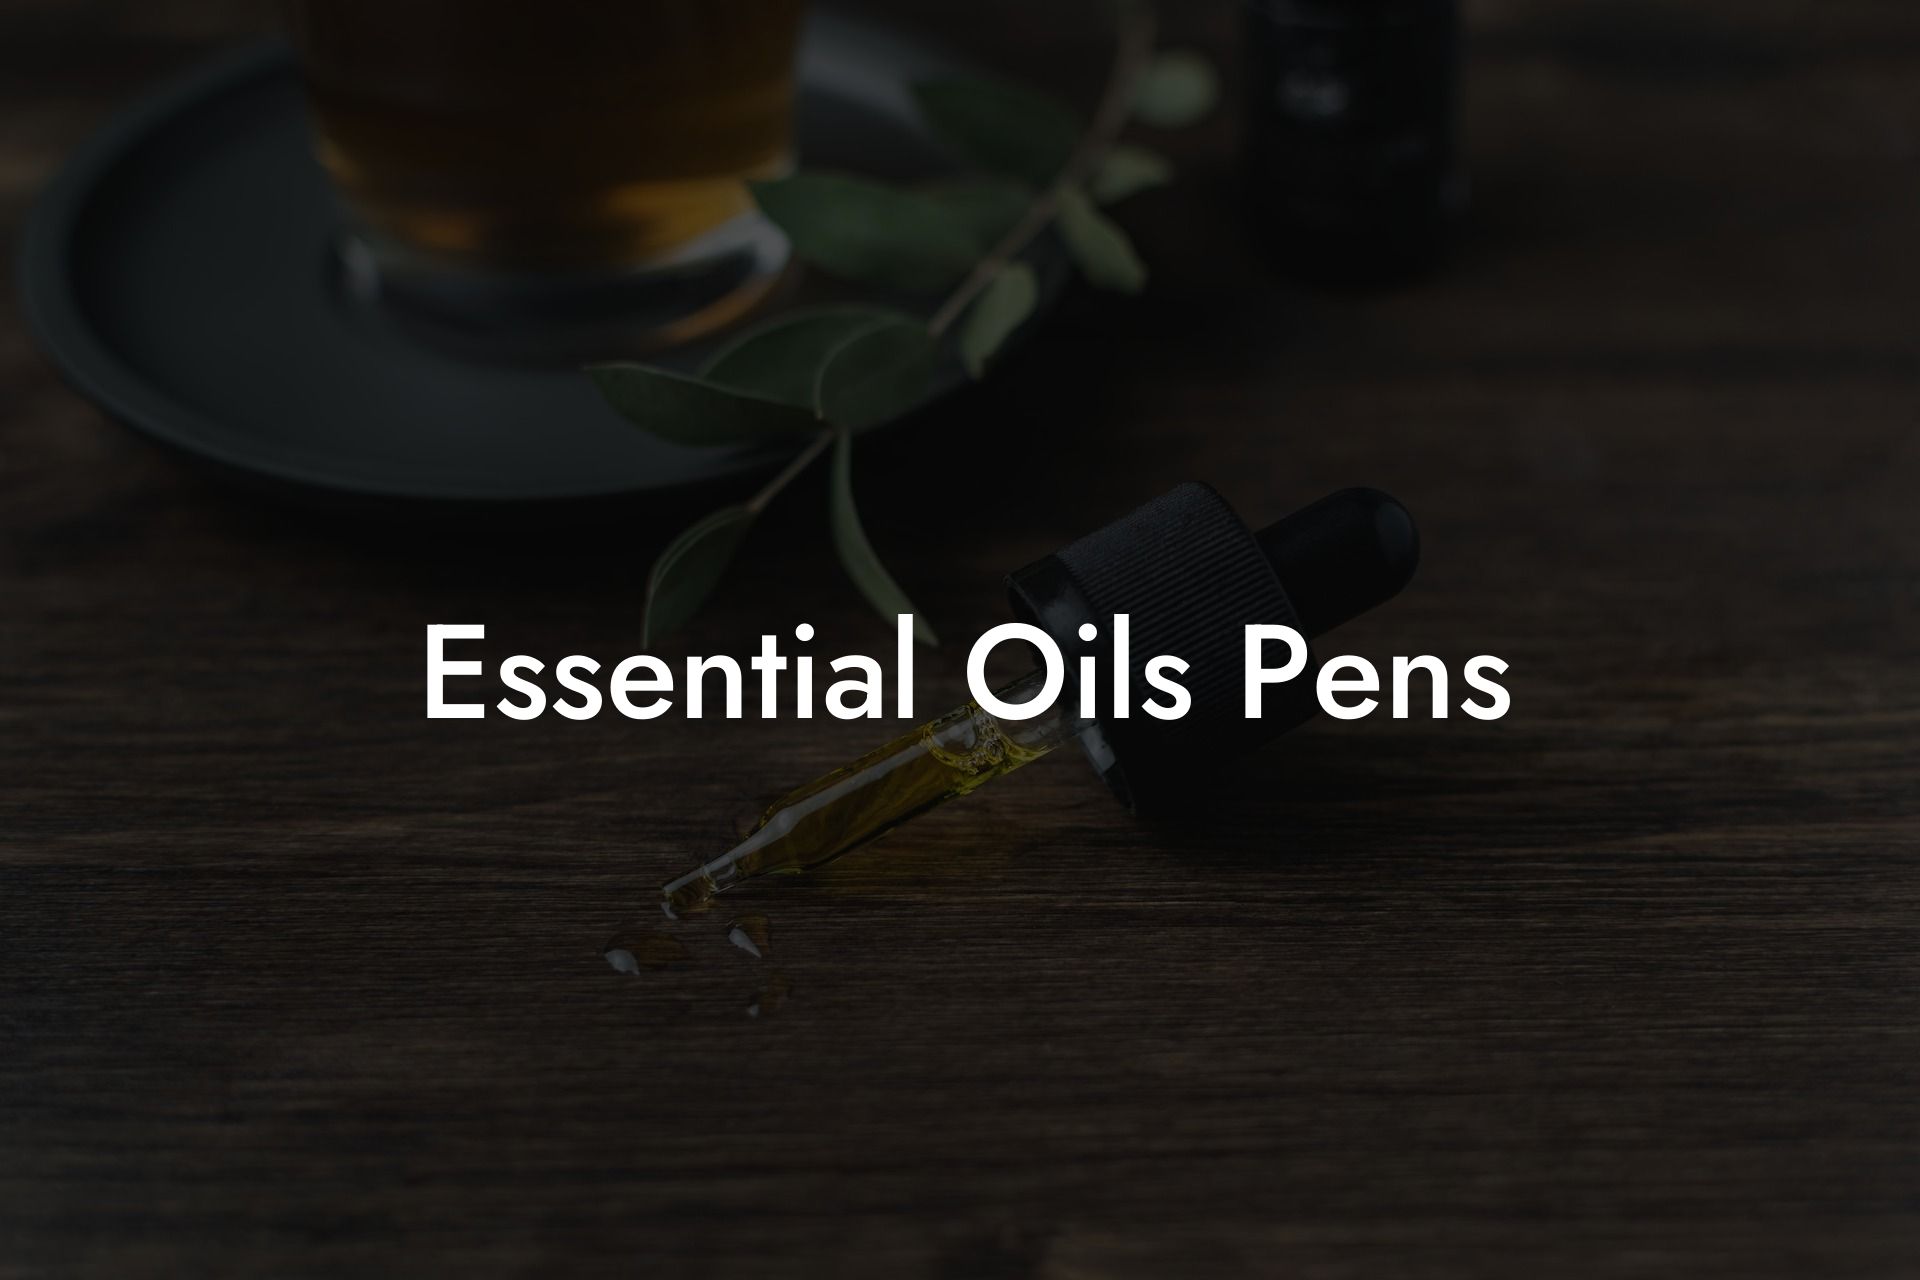 Essential Oils Pens